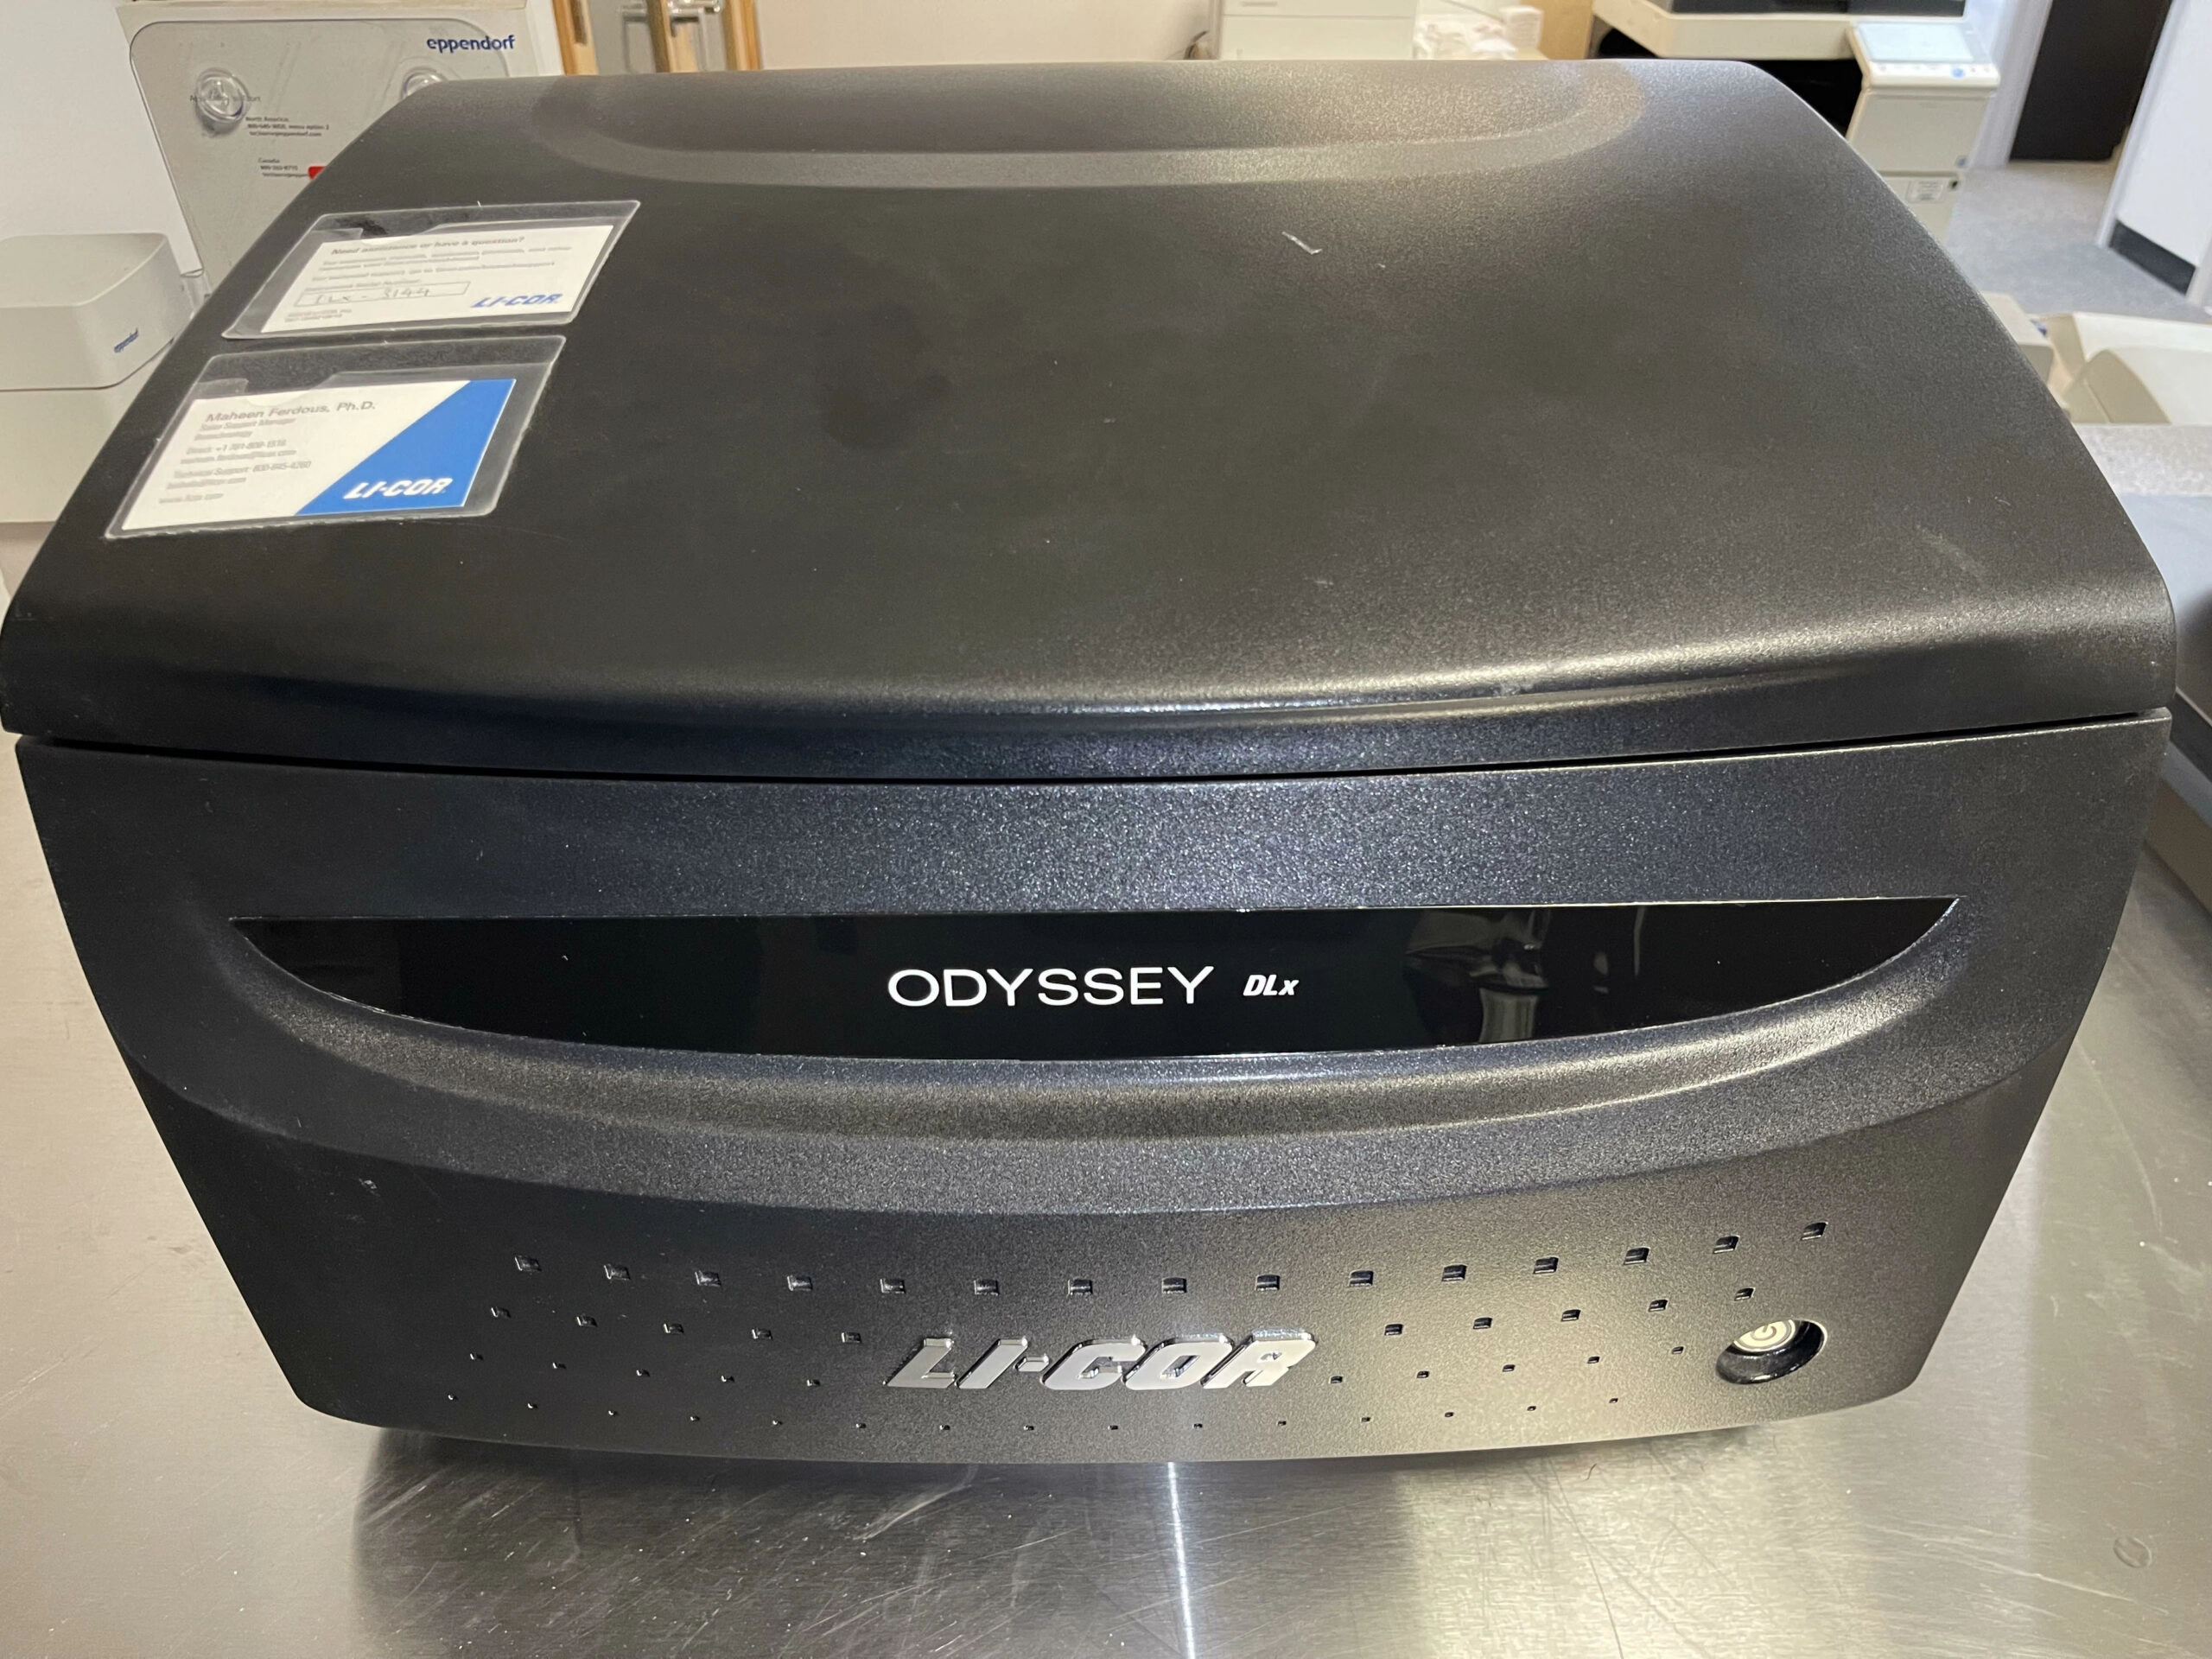 Li-Cor Odyssey DLx Infared Imaging System